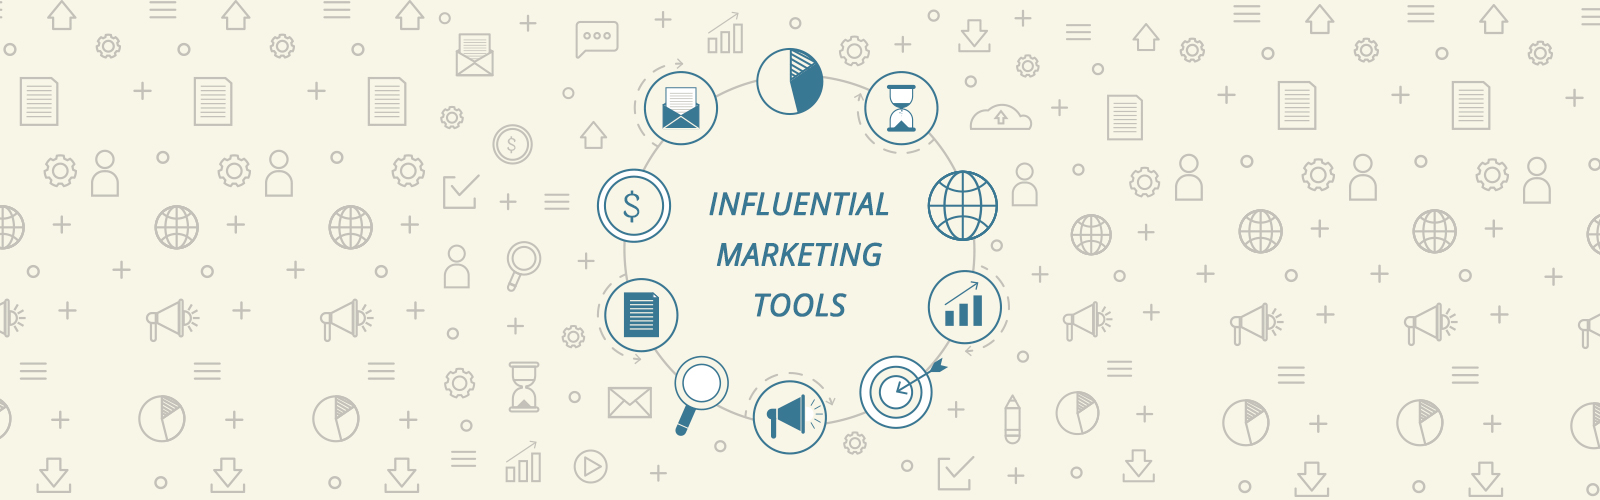 Influencer Marketing tools